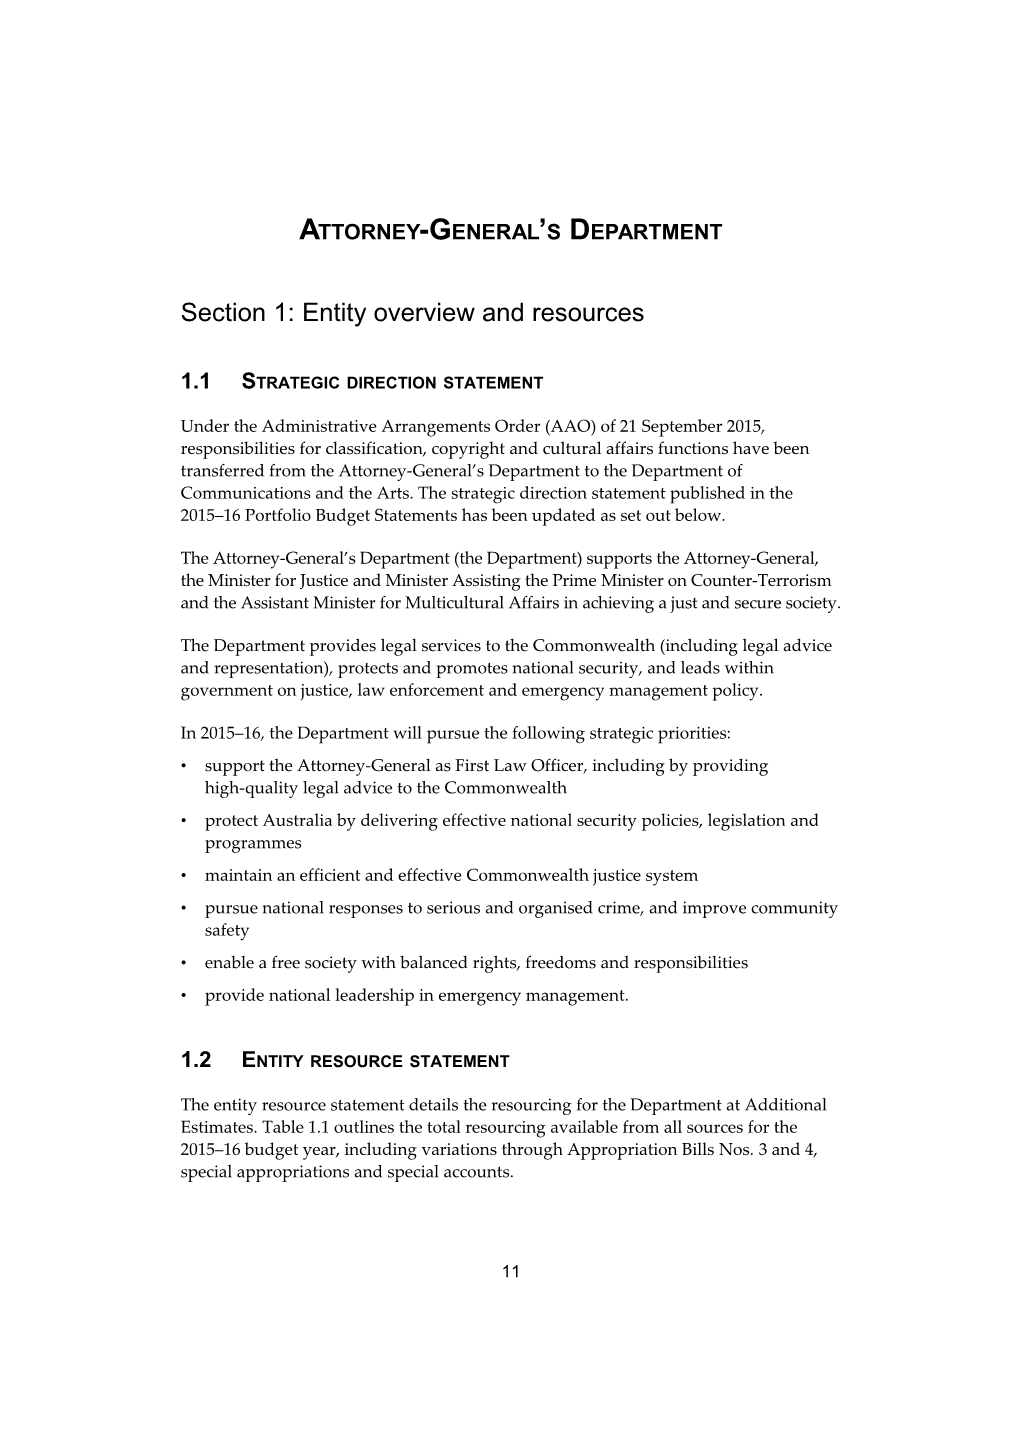 Portfolio Additional Estimates Statements 2015-16 - ATTORNEY-GENERAL S DEPARTMENT